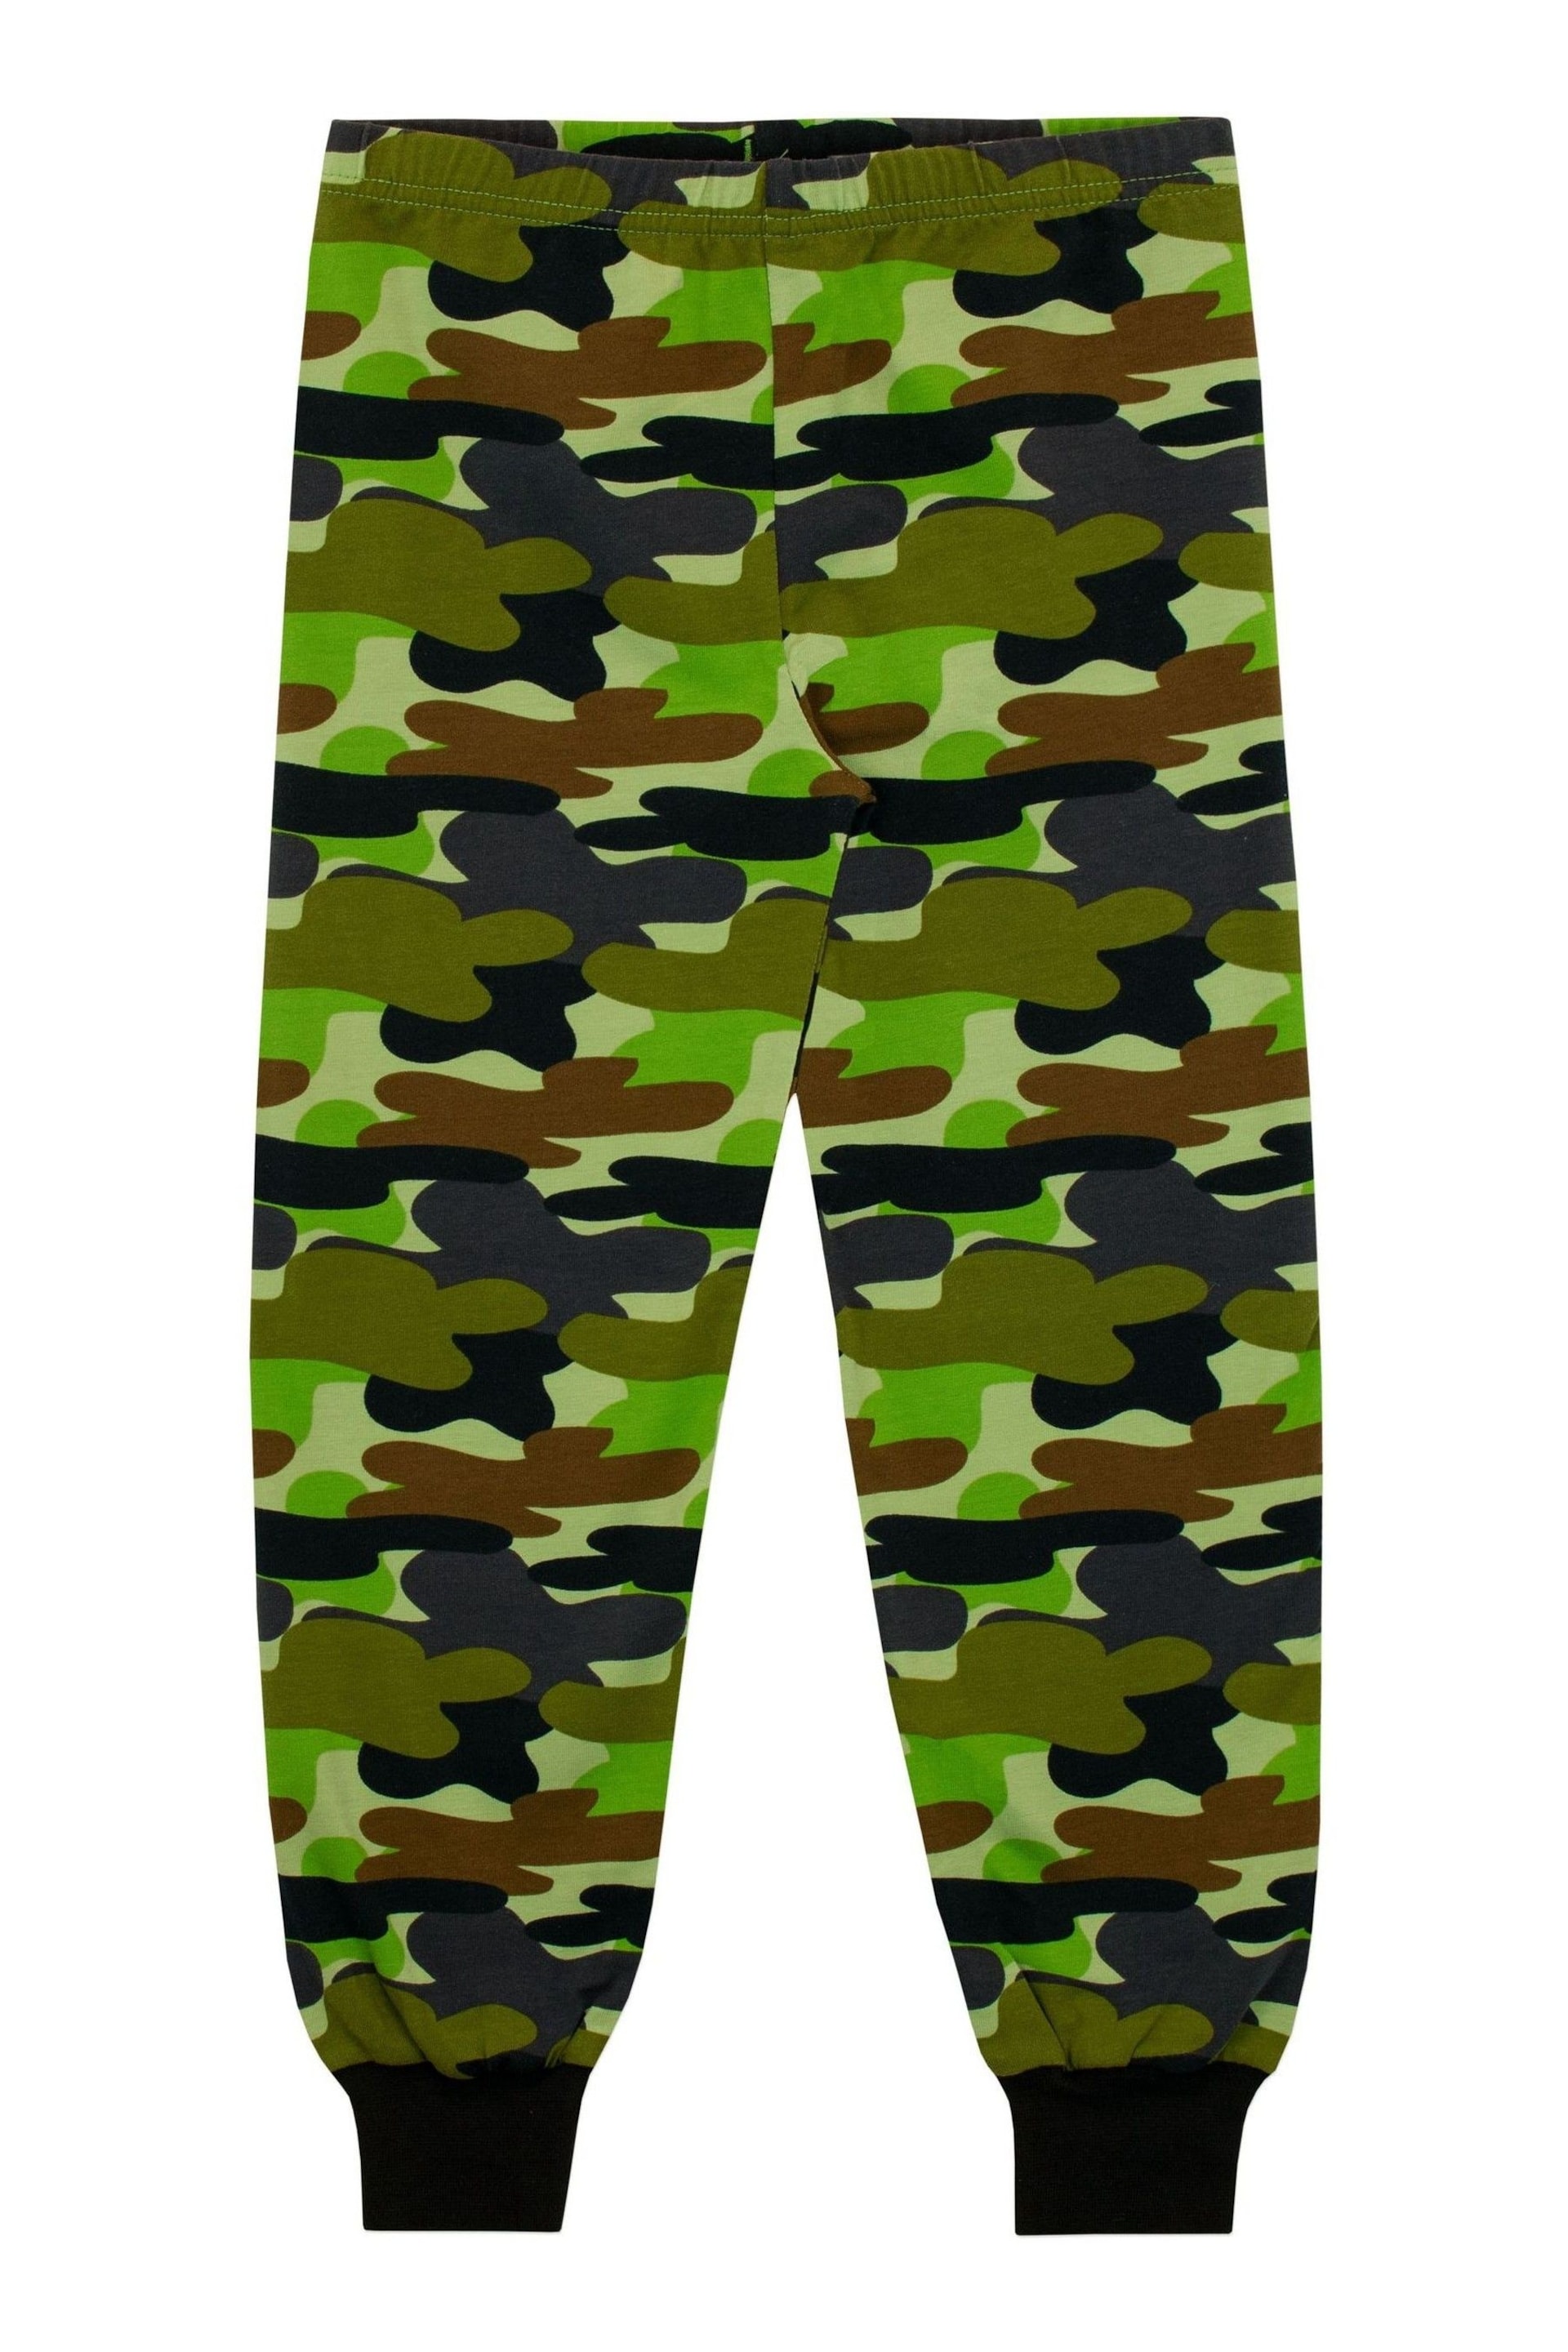 Harry Bear Green Camouflage Pyjamas - Snuggle Fit - Image 3 of 5